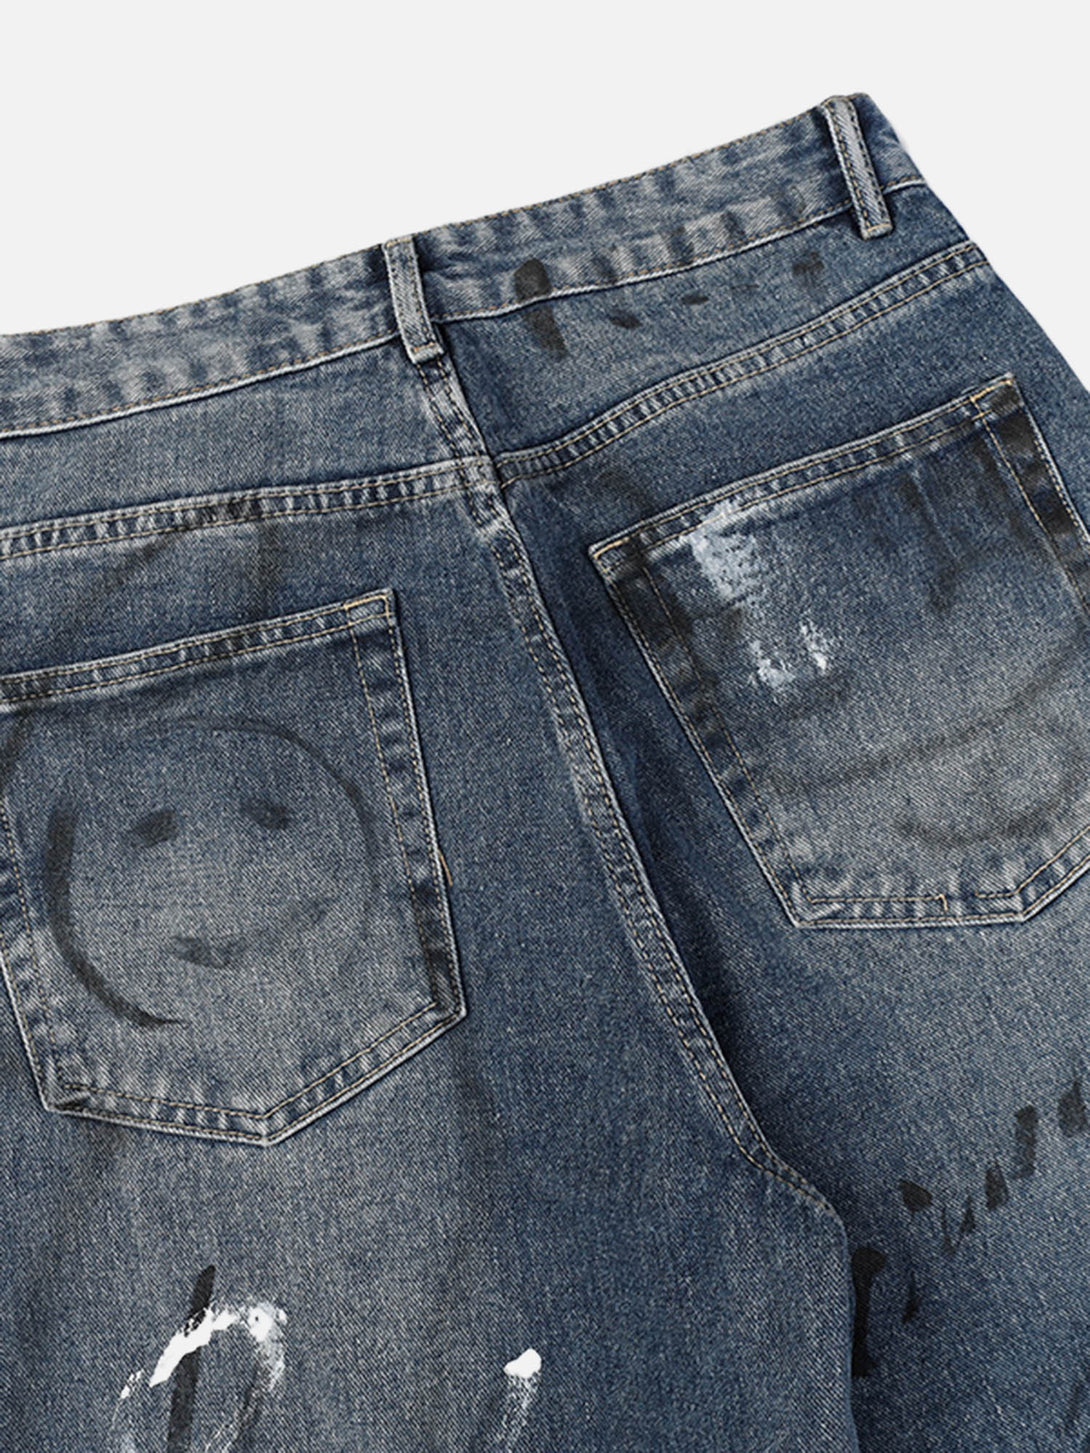 Majesda® - American Street Fashion Fun Graffiti Washed Distressed Jeans- Outfit Ideas - Streetwear Fashion - majesda.com